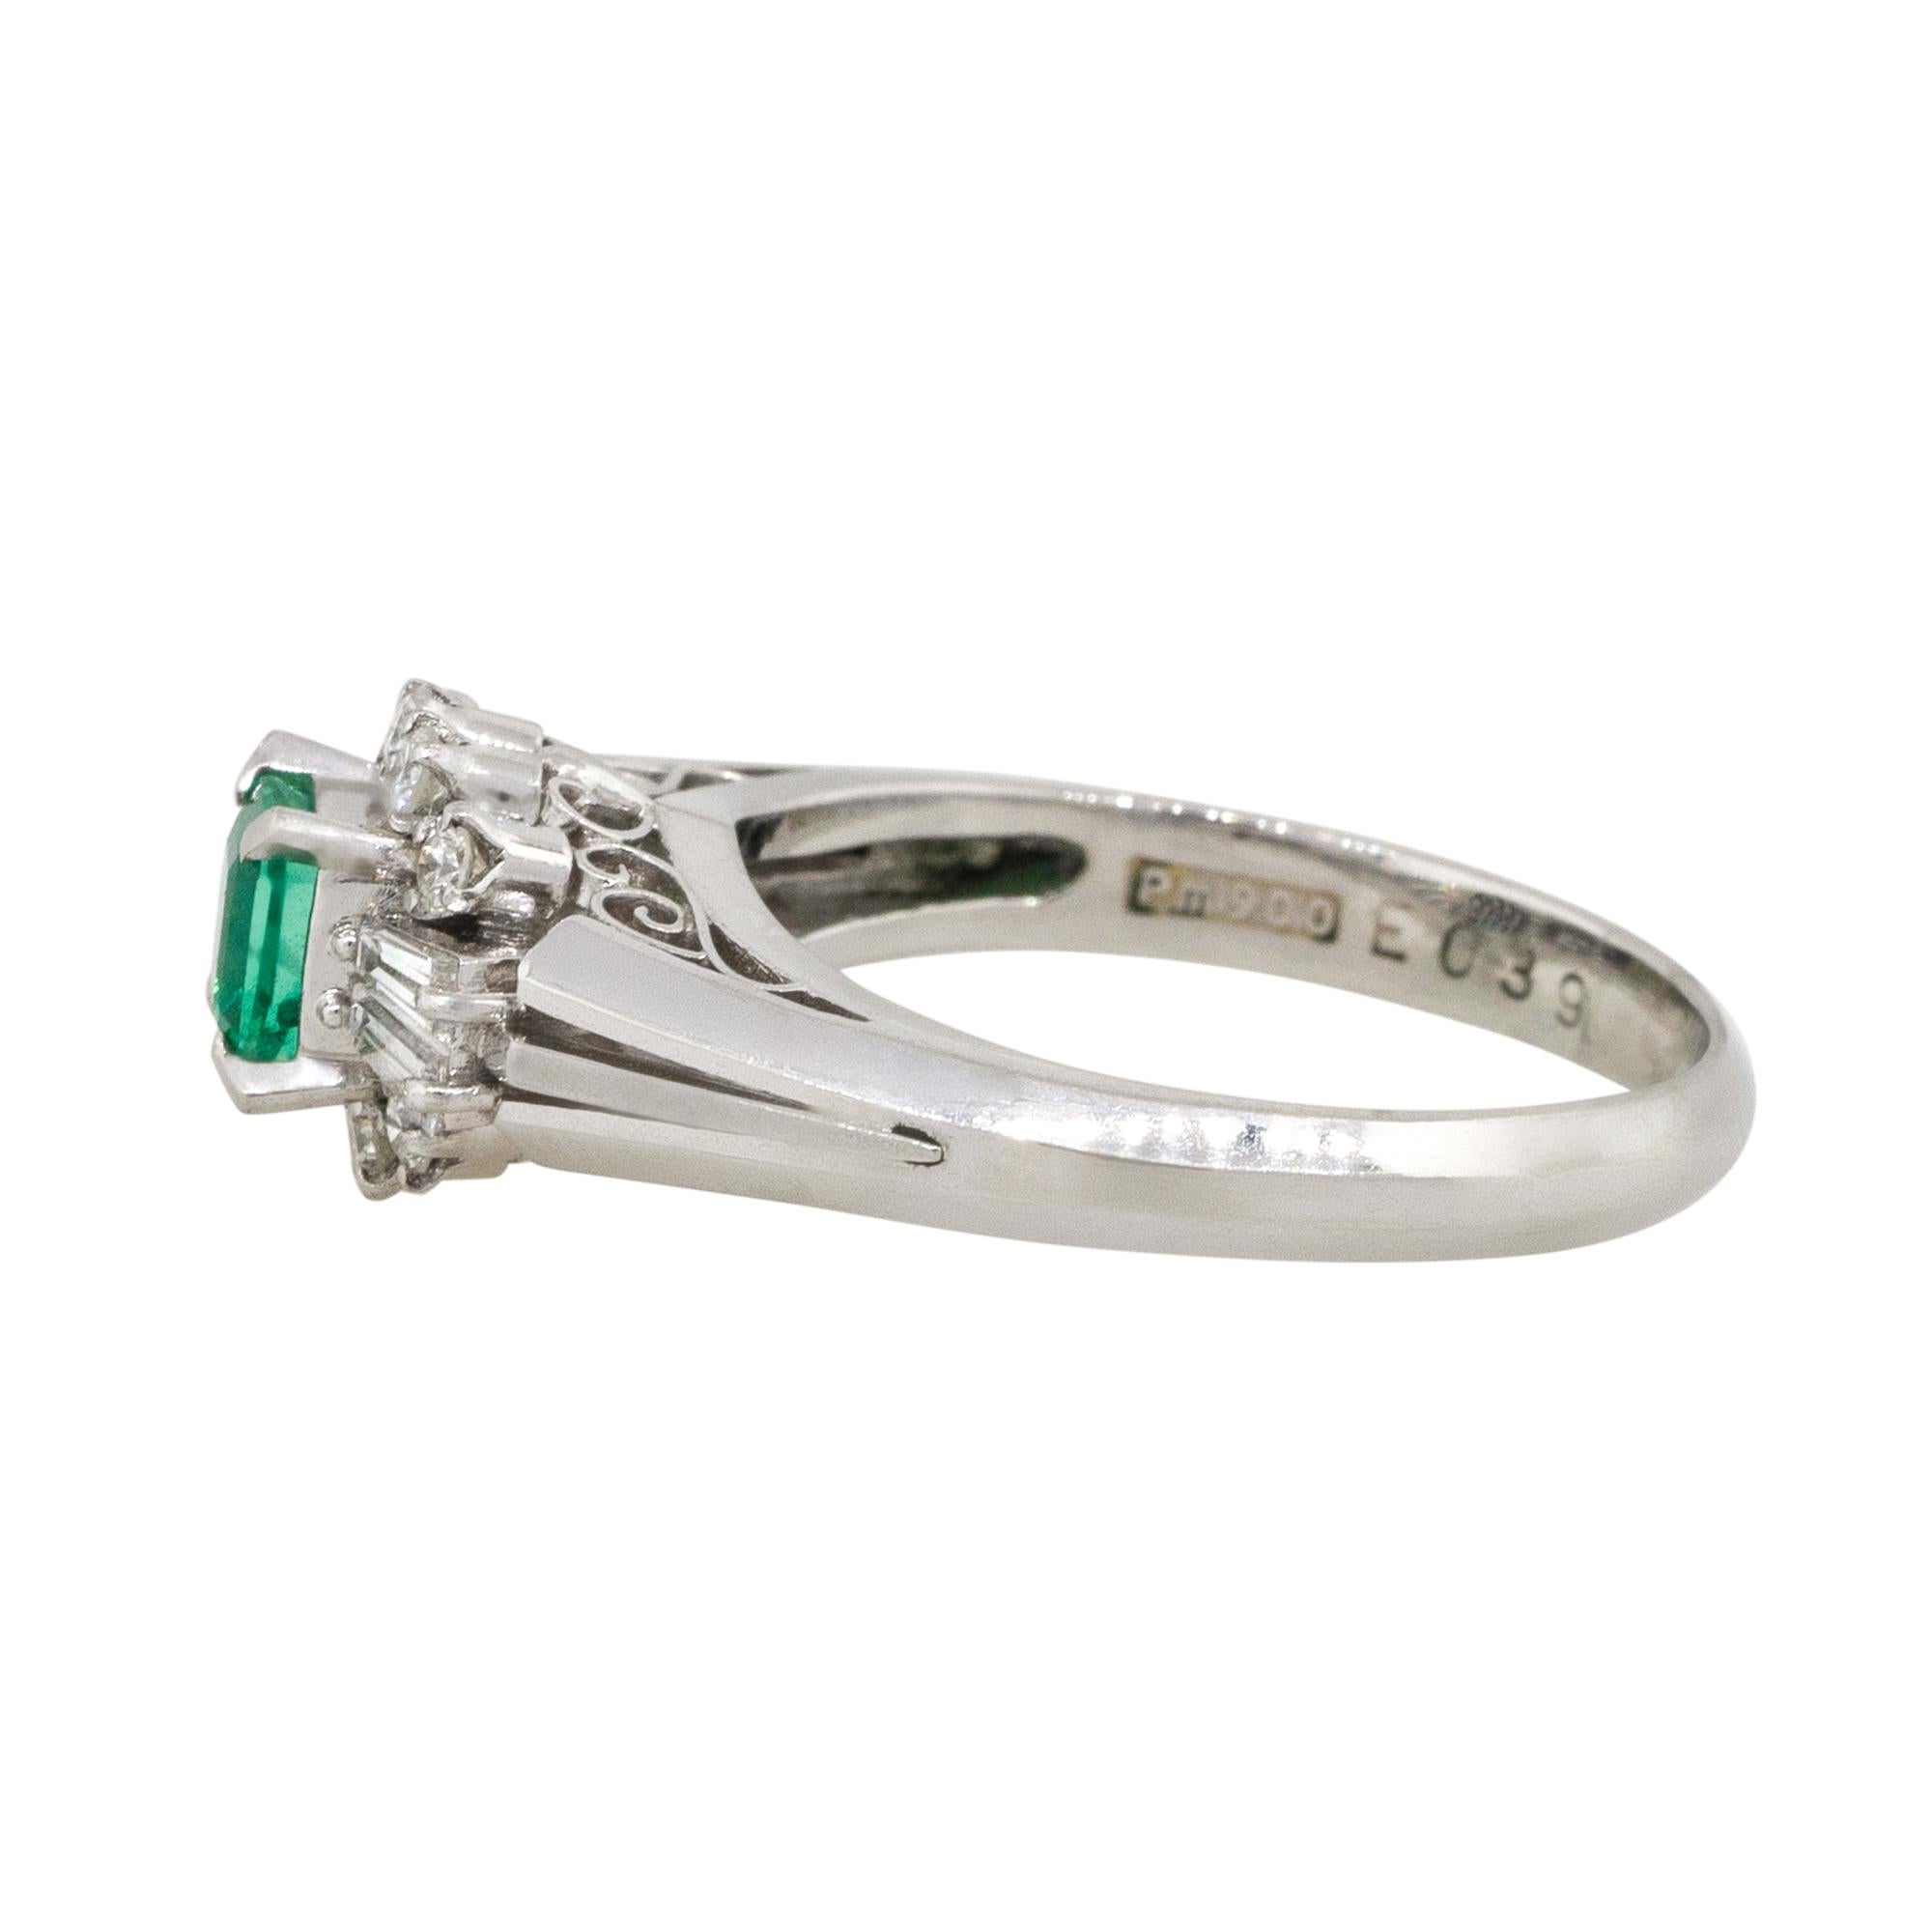 Emerald Cut 0.39 Carat Emerald Center Diamond Cocktail Ring Platinum in Stock For Sale